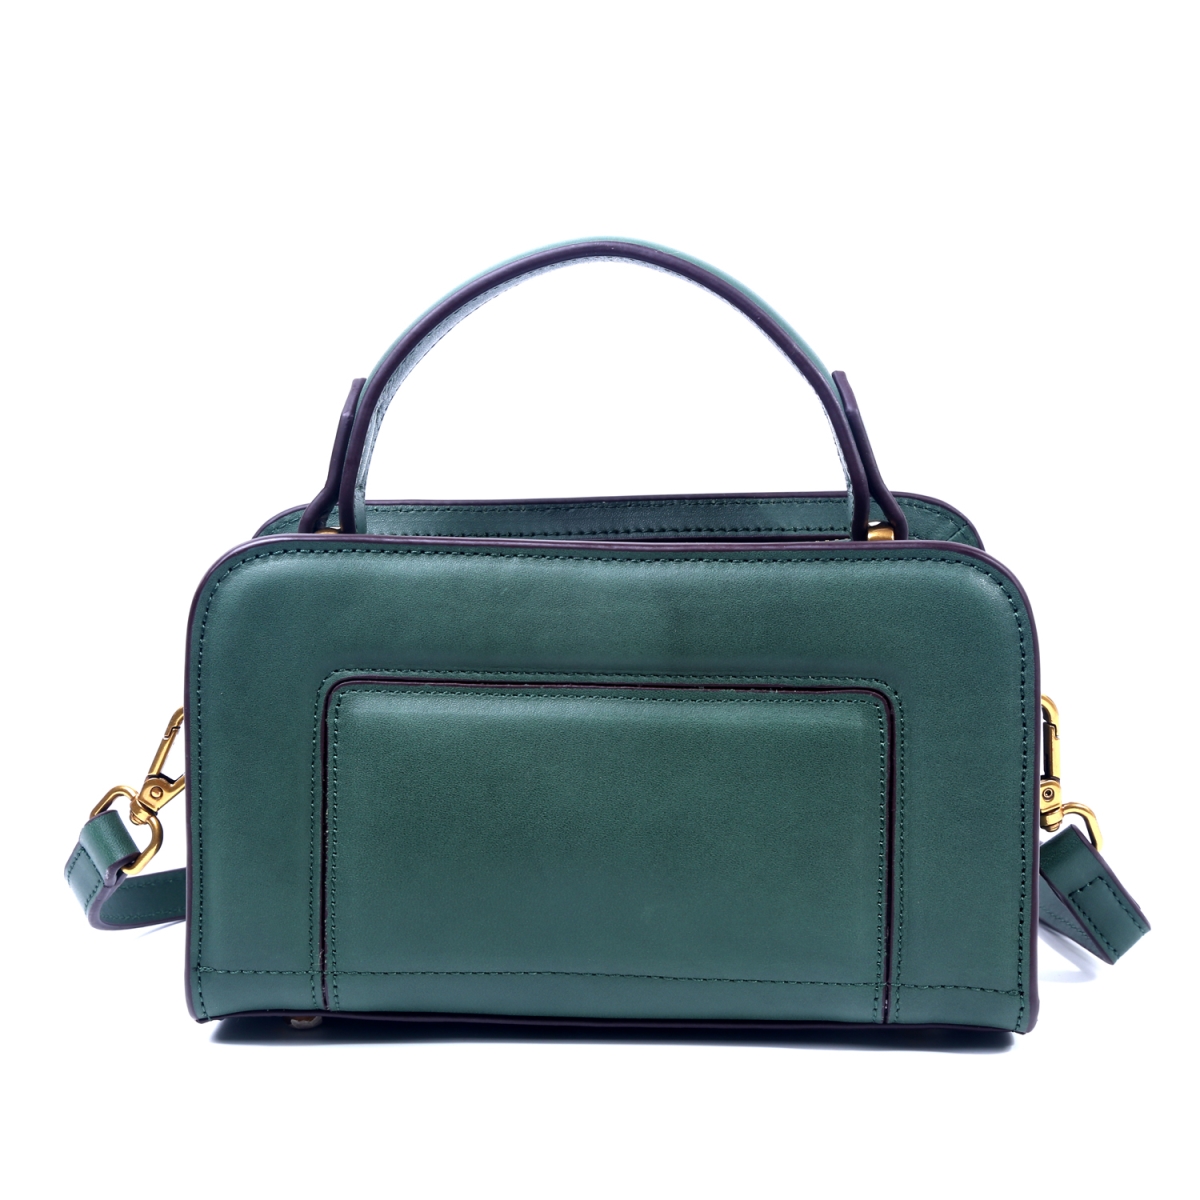 Fe8001-green Genuine Leather Ashley Satchel - Green